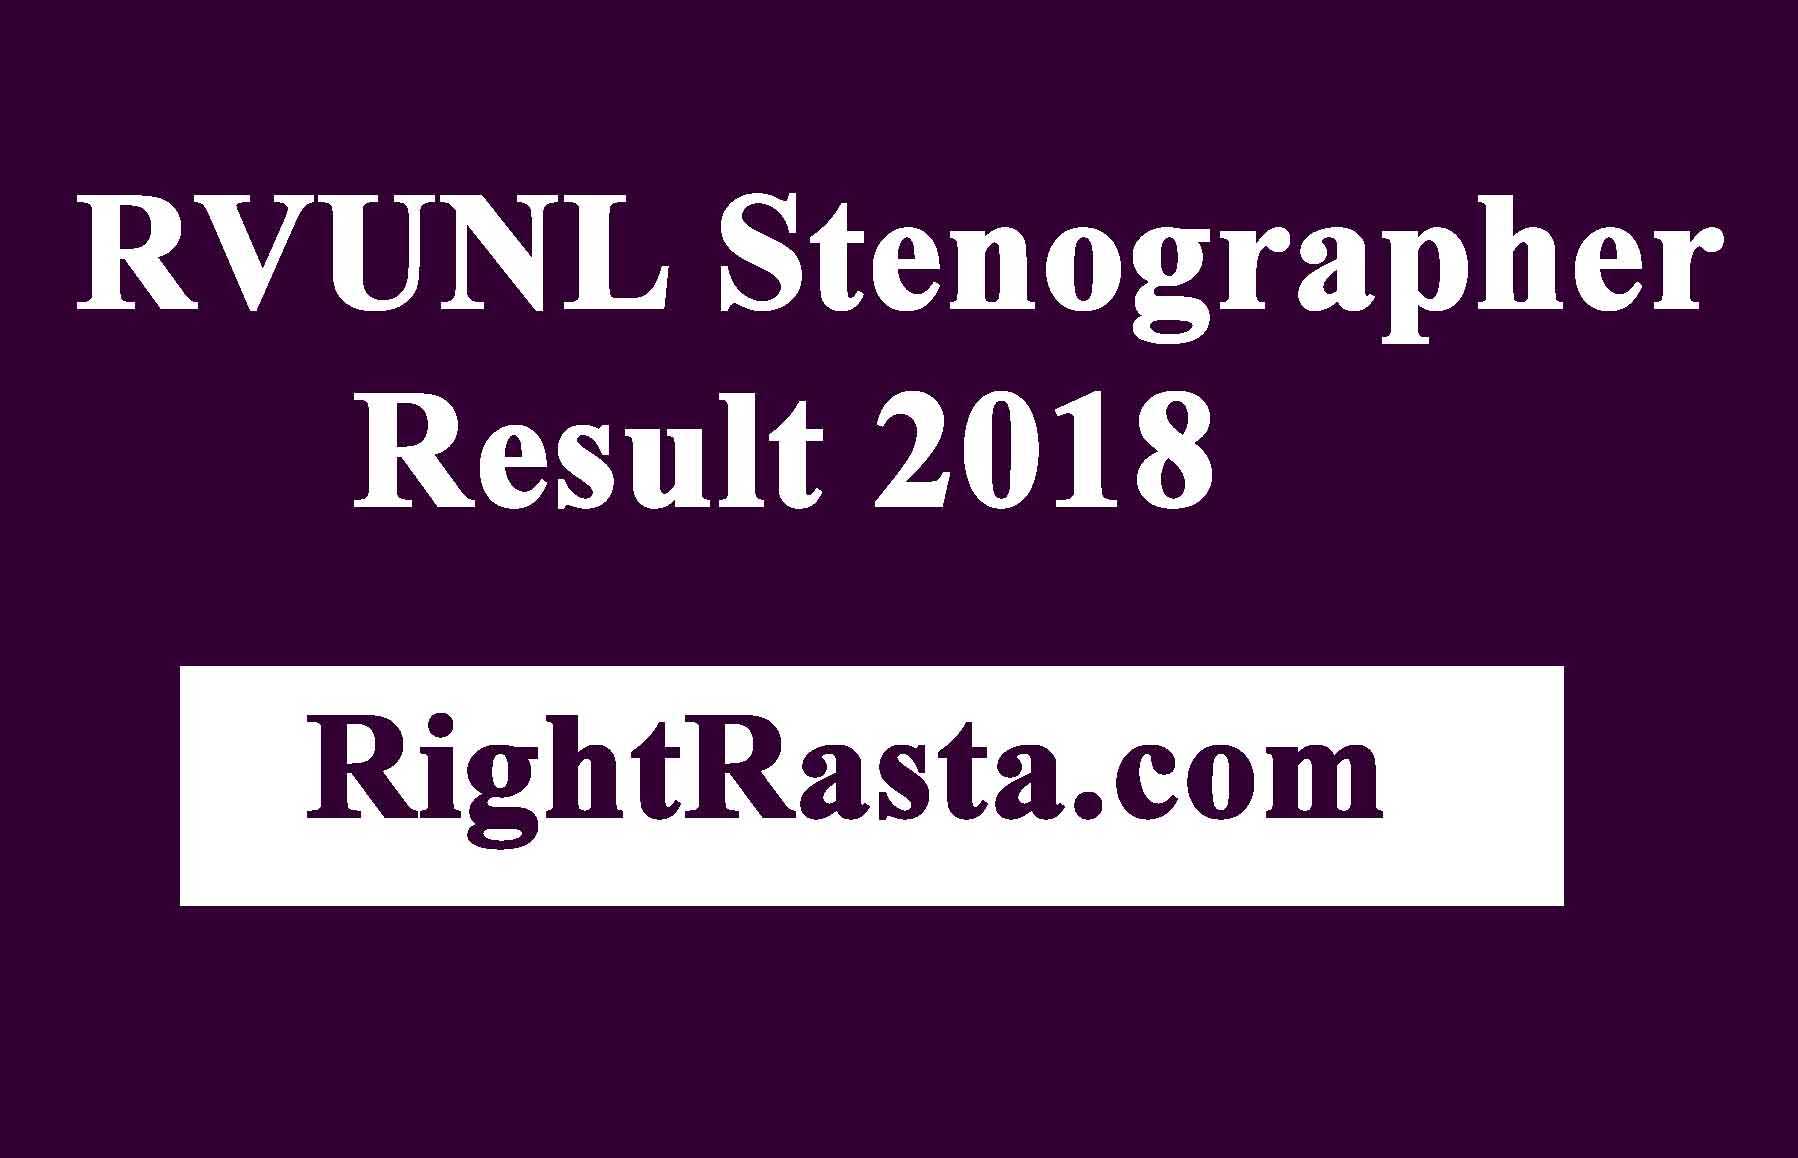 RVUNL Stenographer Result 2018